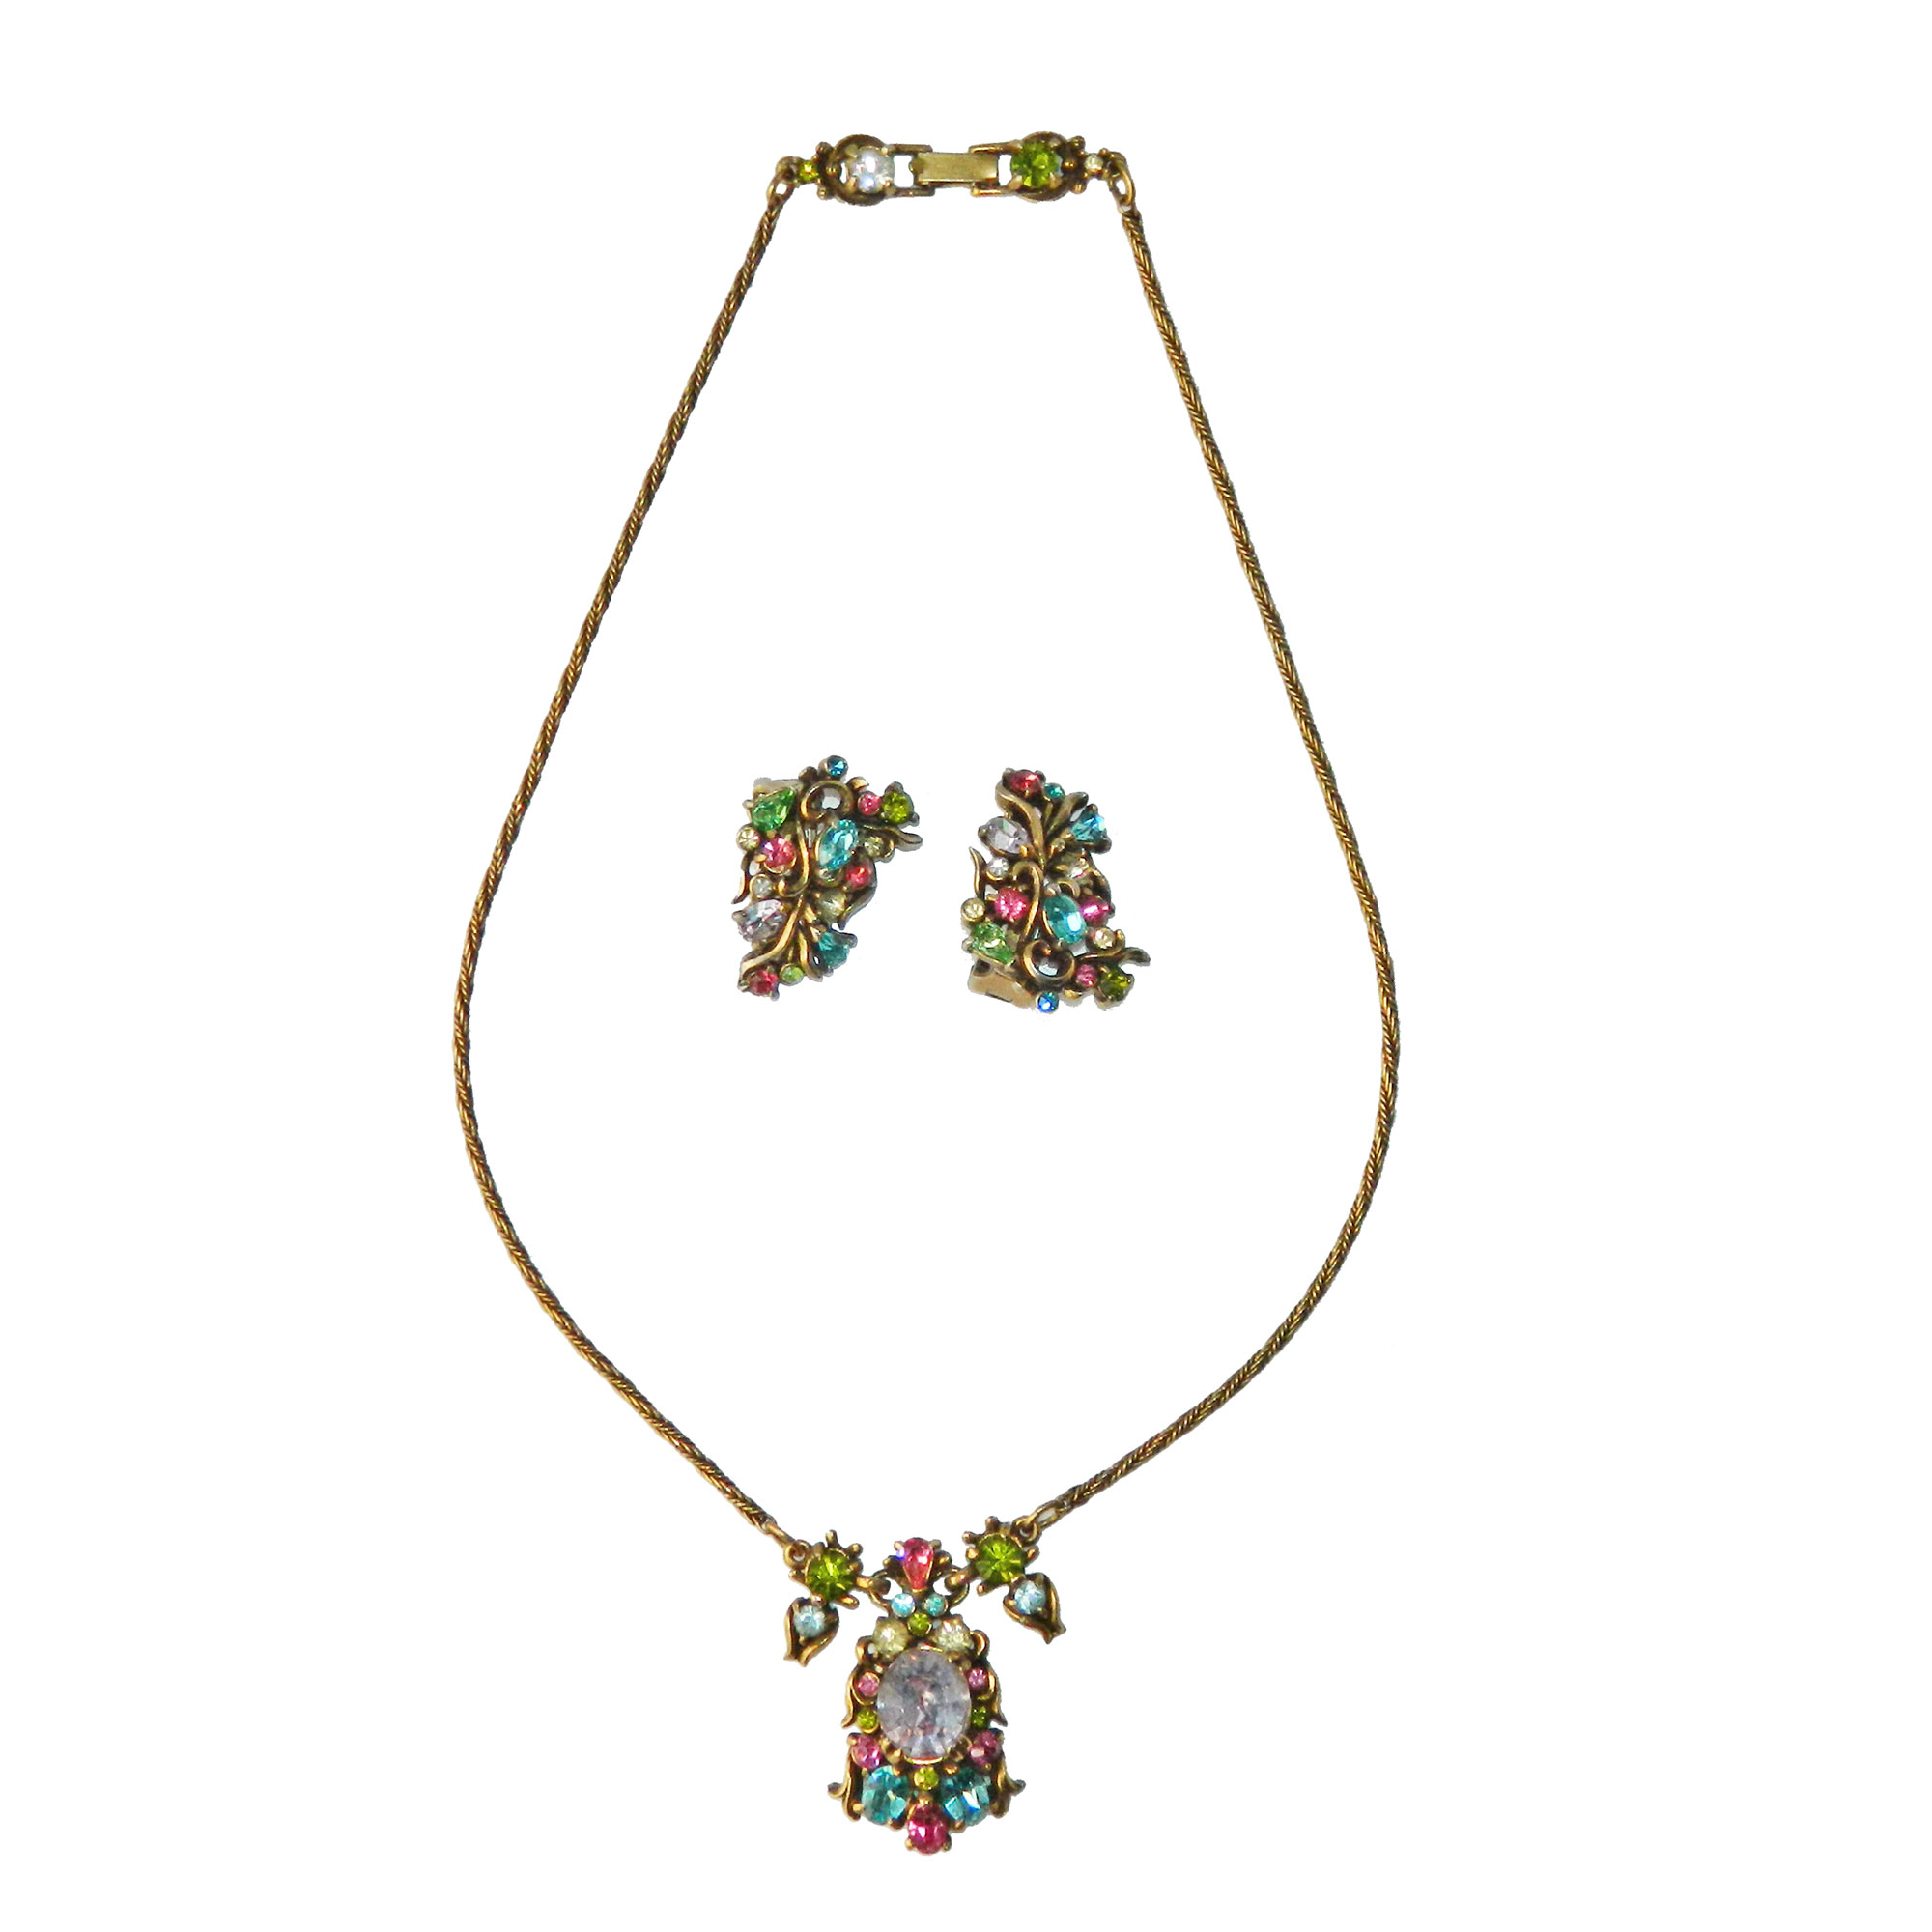 Hollycraft pendant necklace set